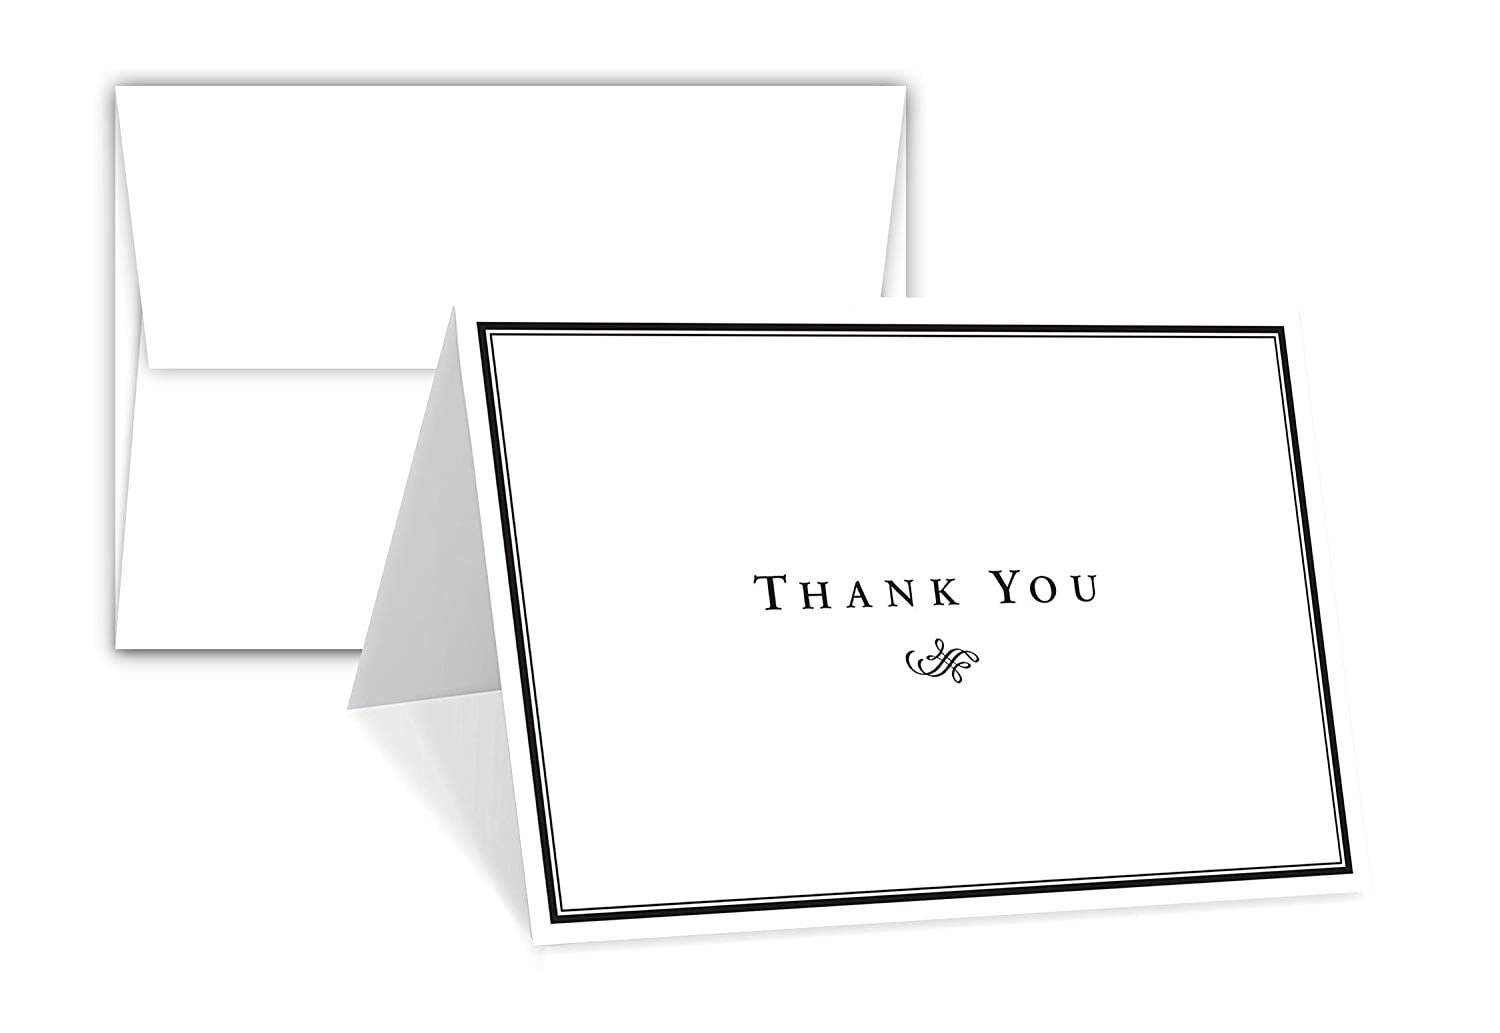 5 Designs w Envelopes Black-Gold 4x6 Folded 100 Pcs Thank You Cards Bulk Set 